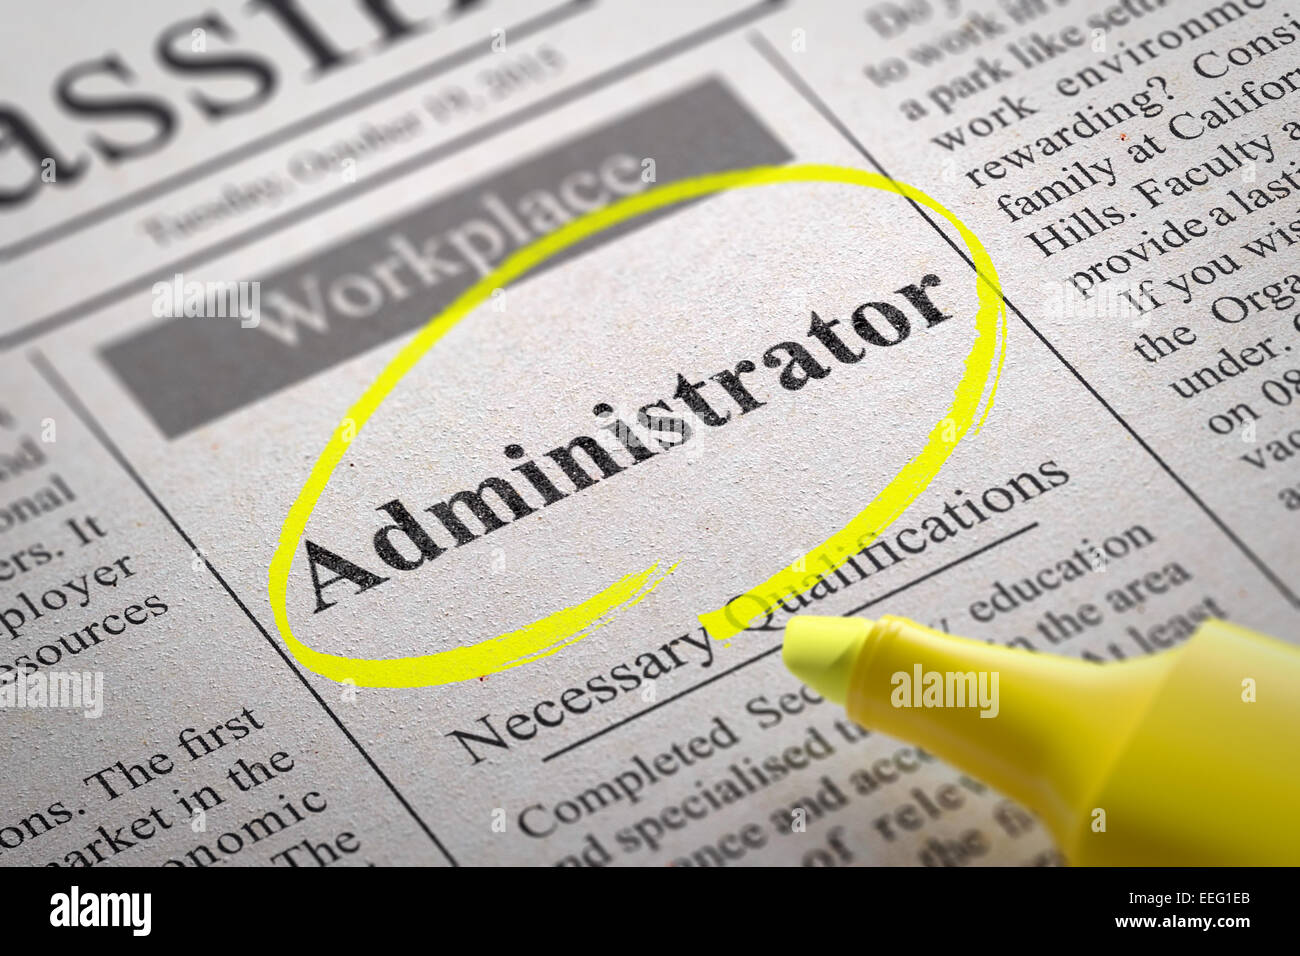 Administrator Jobs in Newspaper. Stock Photo